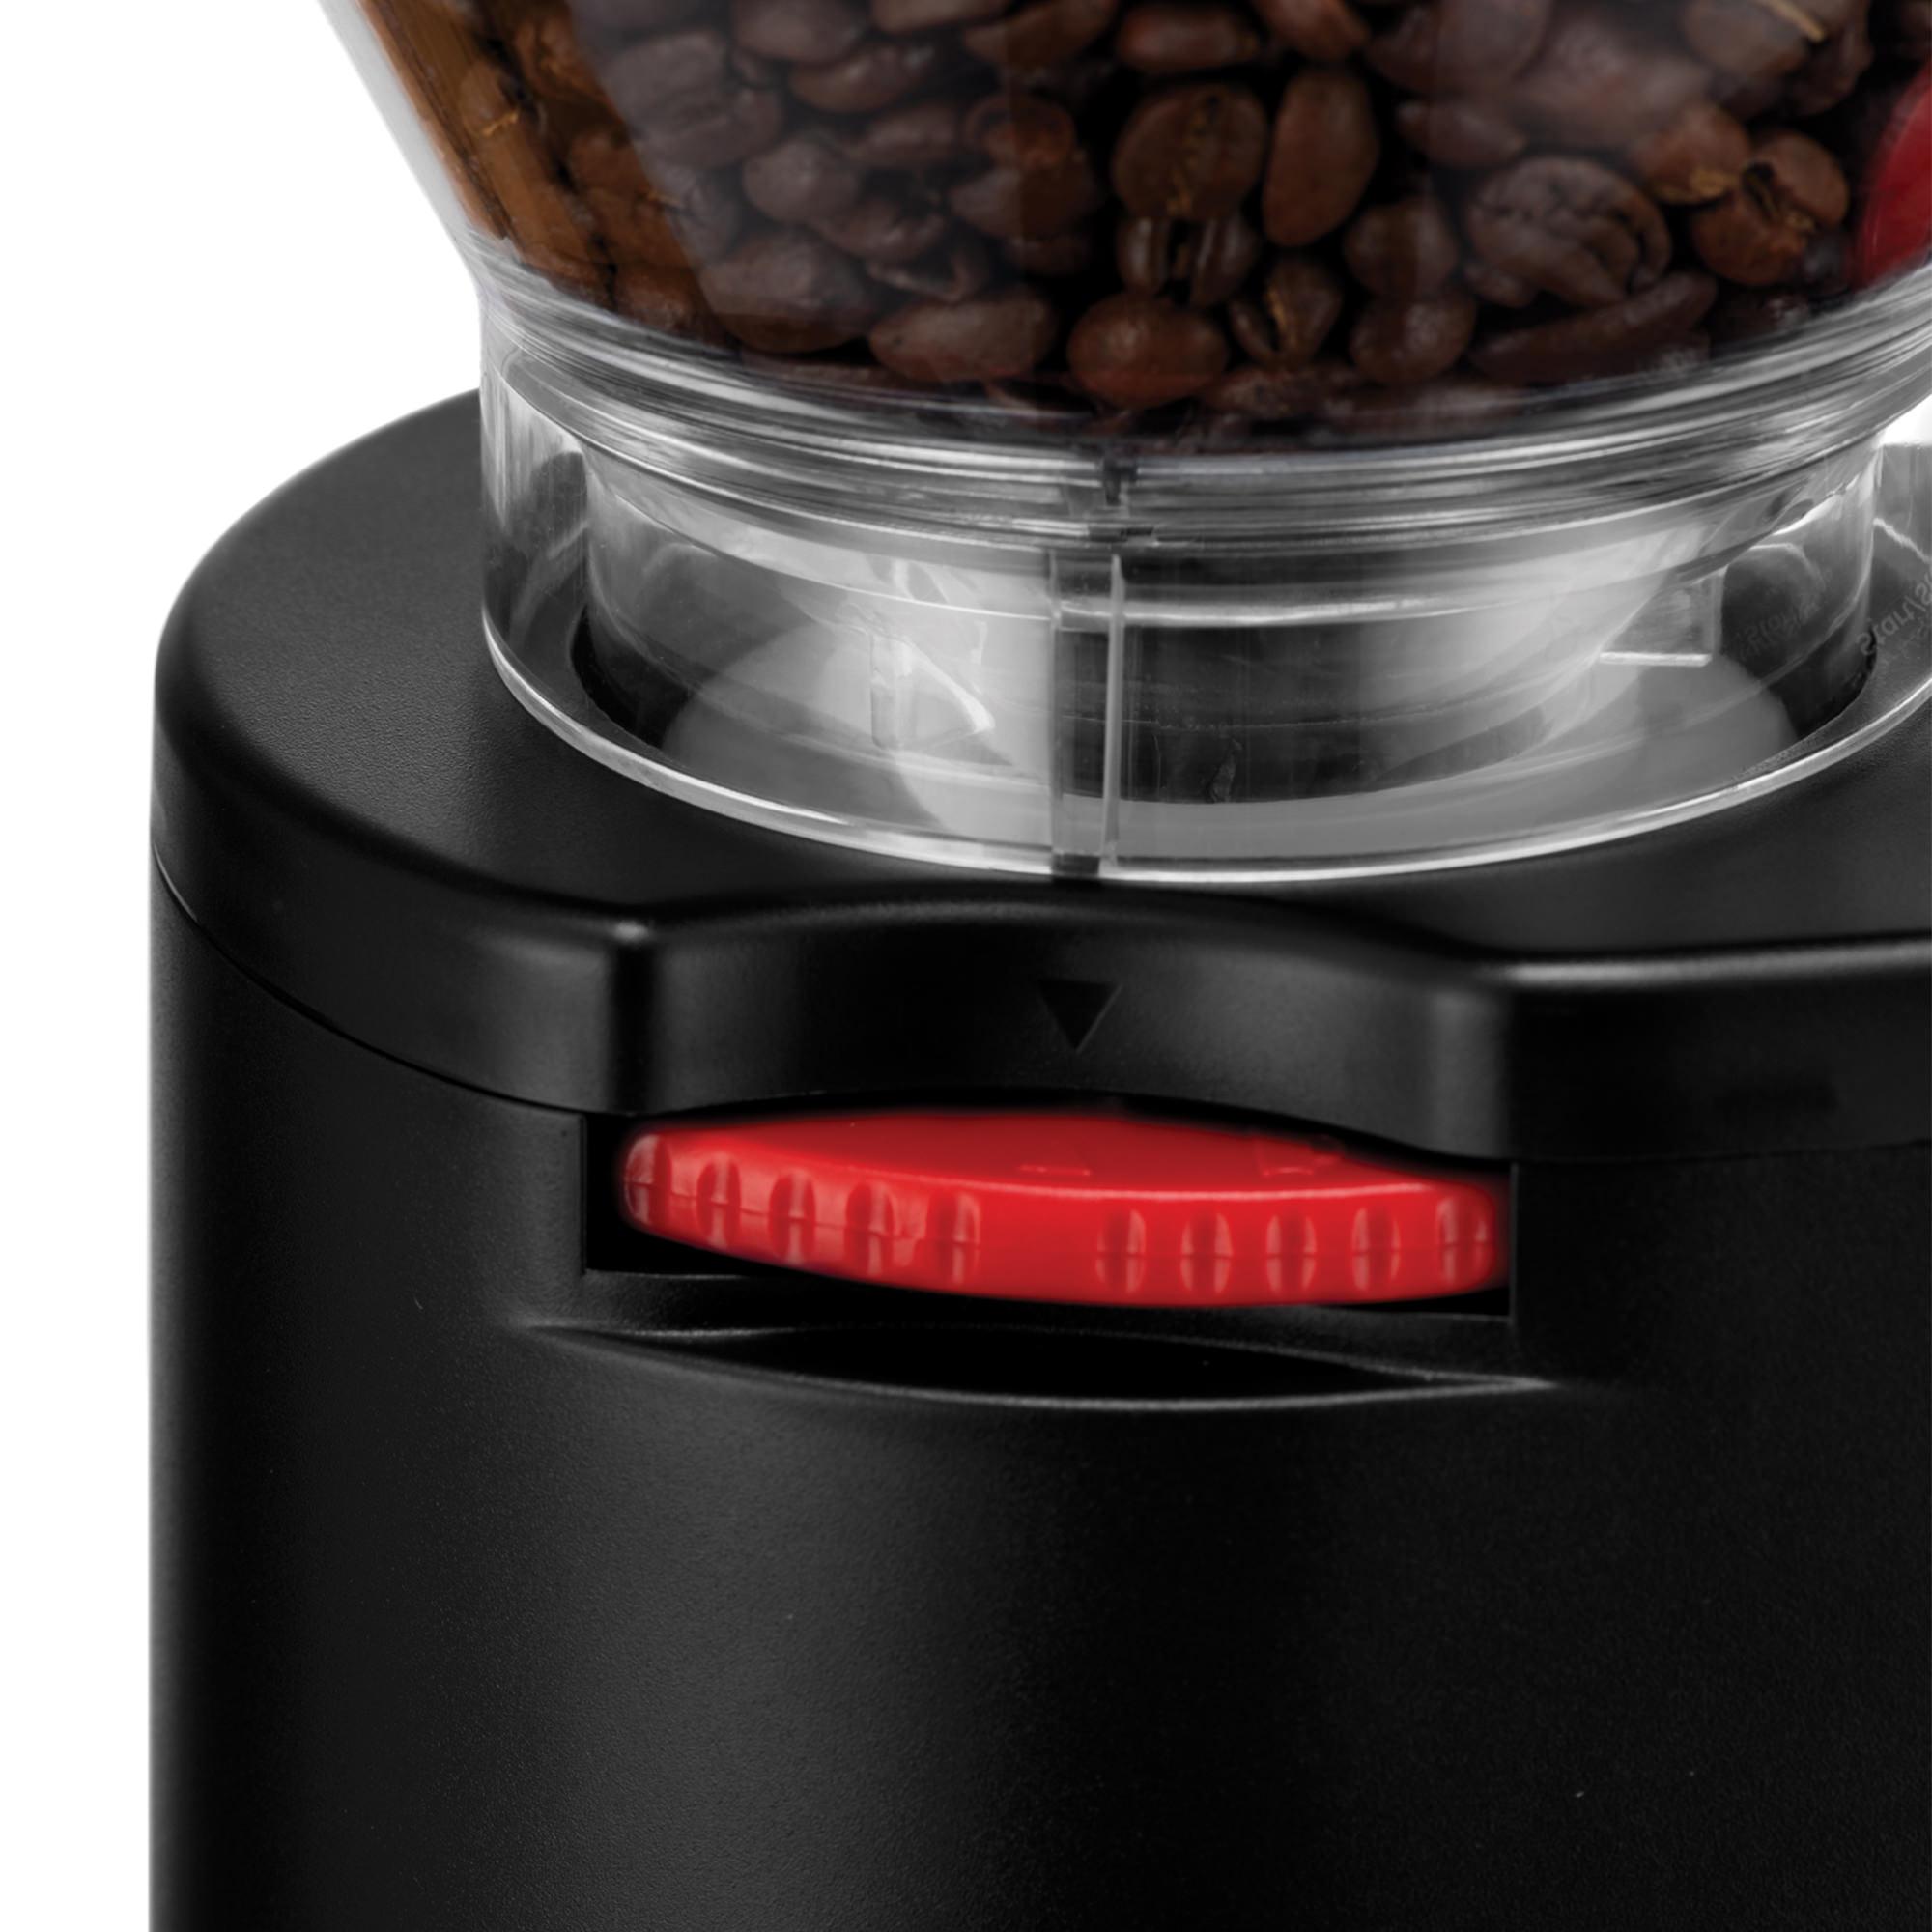 Bodum Bistro Electric Coffee Grinder Black Image 5